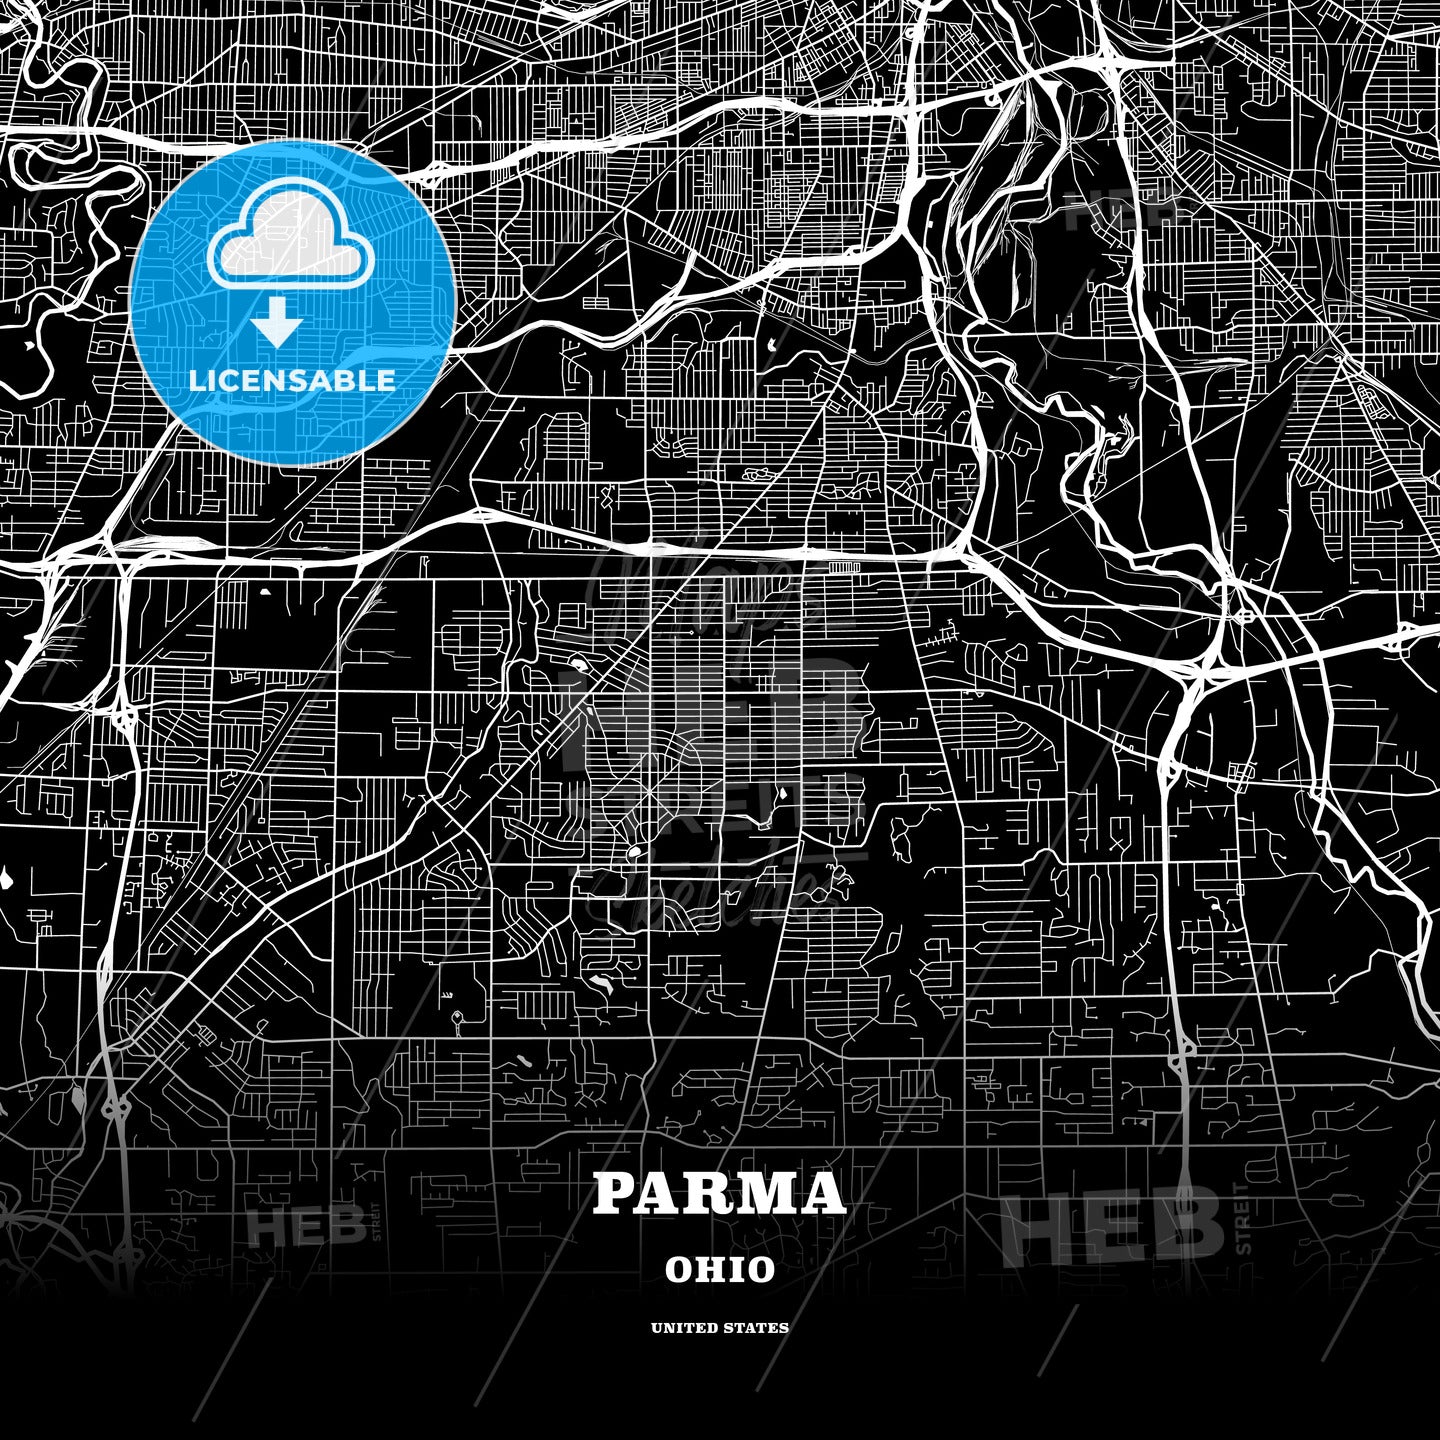 Parma, Ohio, USA map